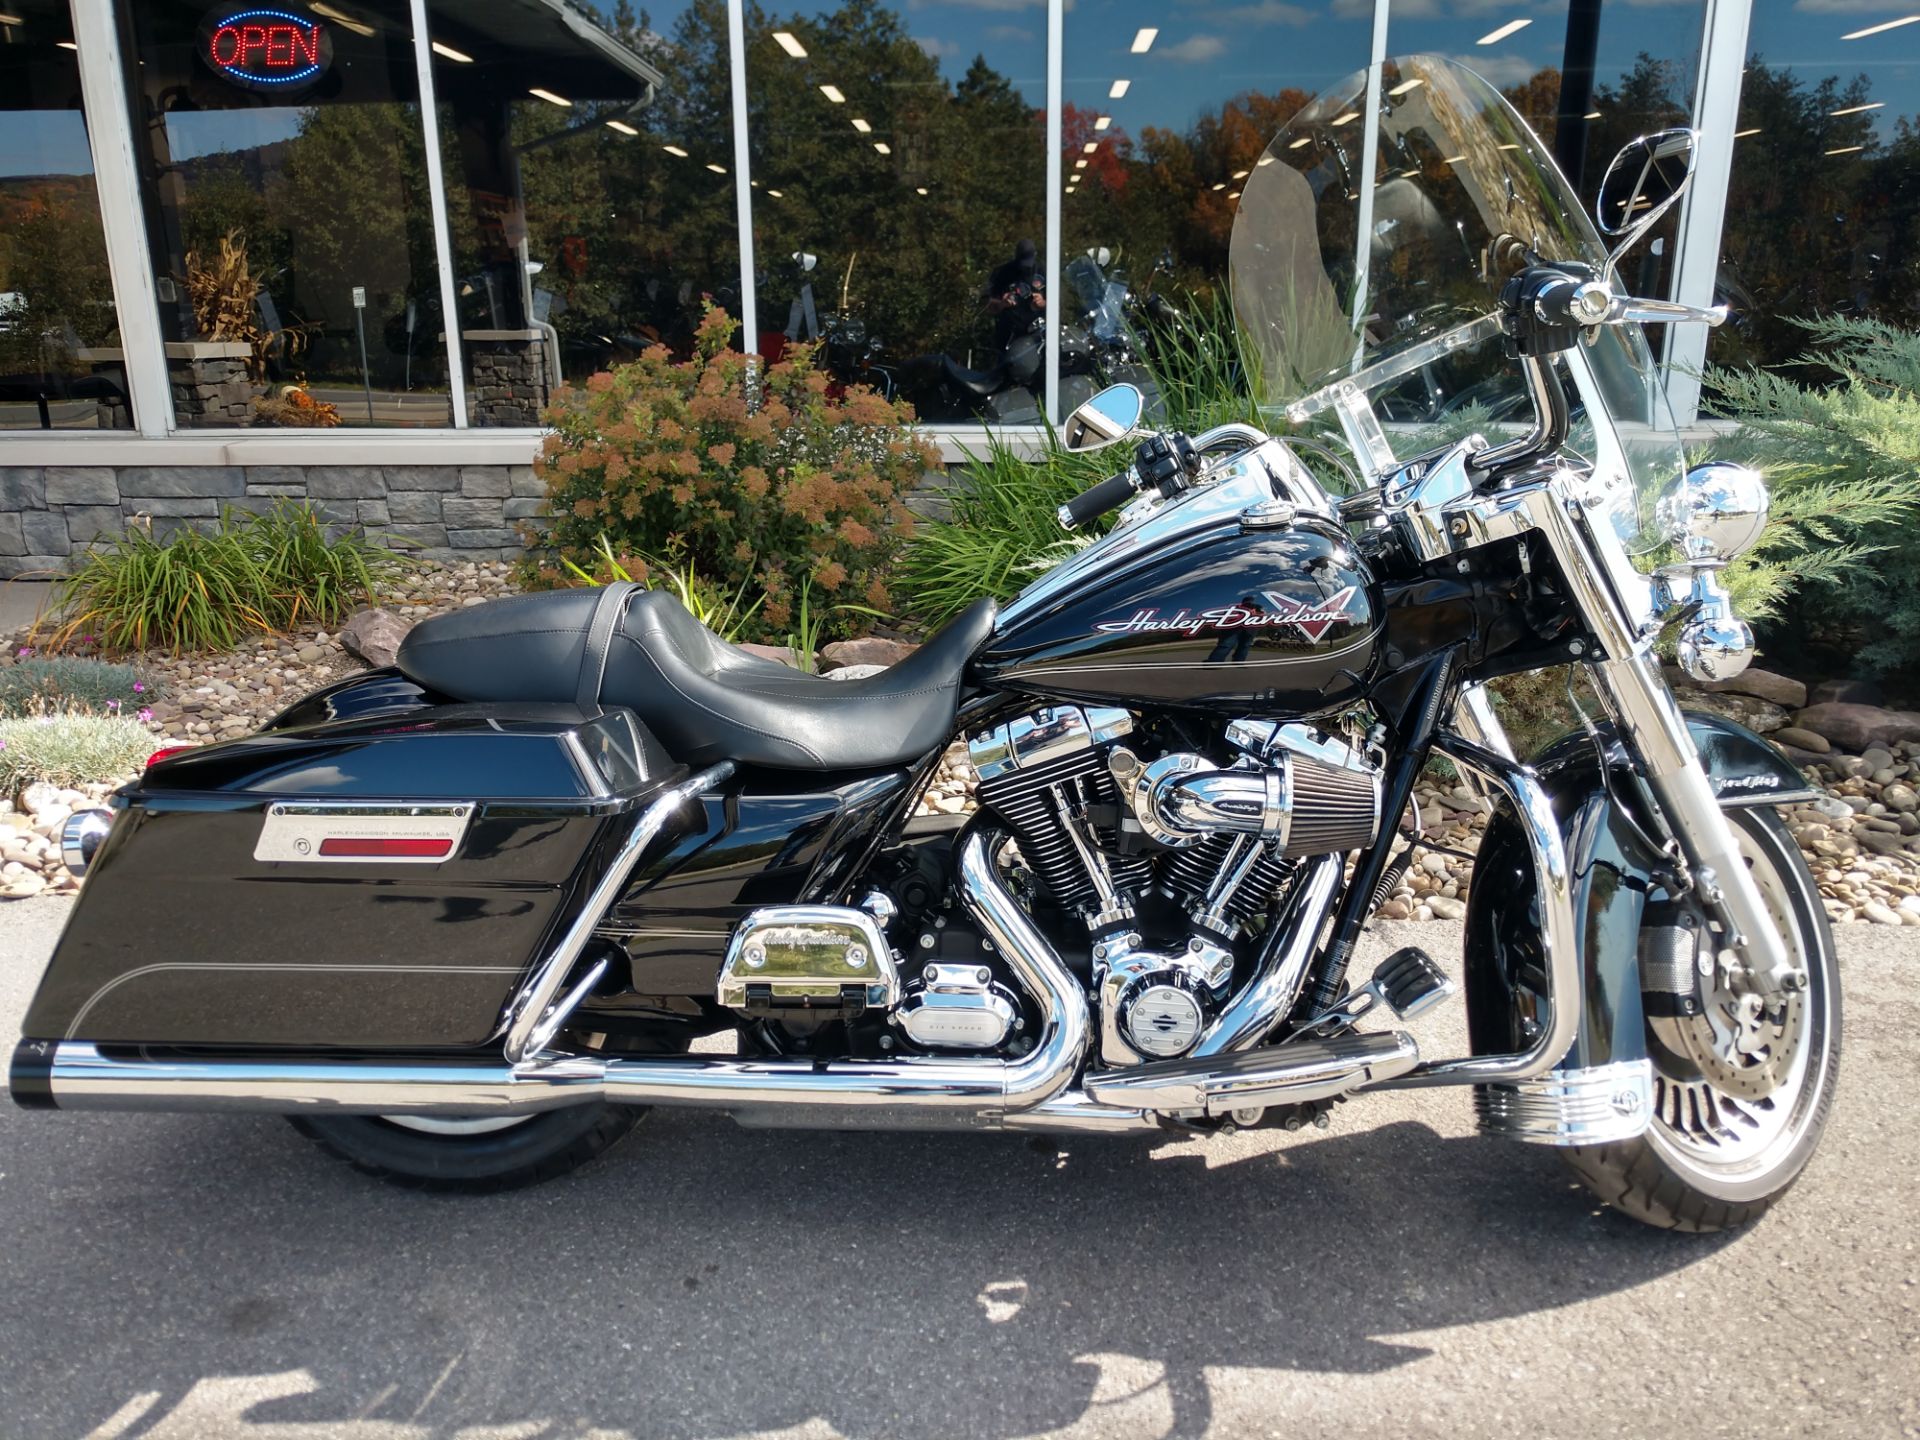 2012 Harley-Davidson Road King® in Duncansville, Pennsylvania - Photo 1